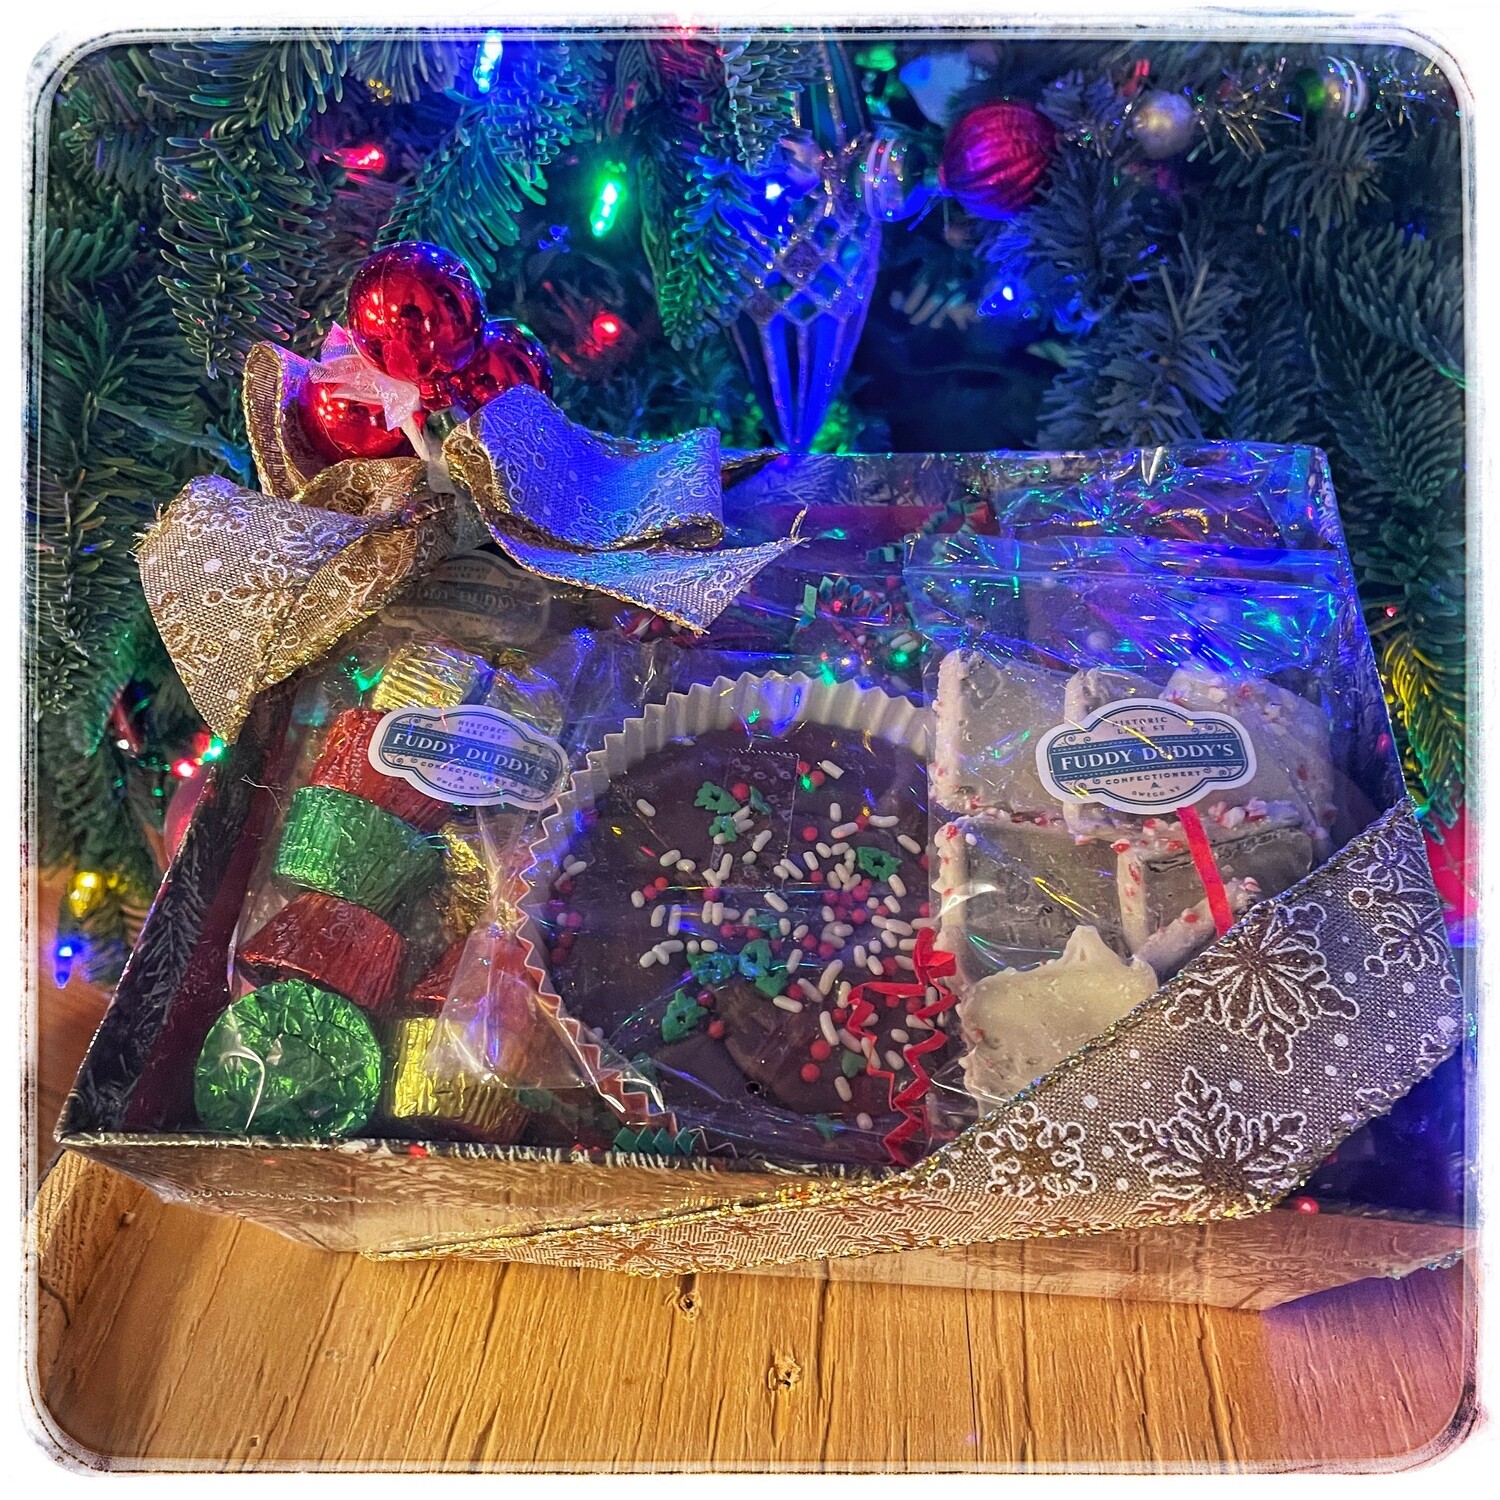 Fuddy Duddy's Chocolate Lovers Holiday Gift Box - Small